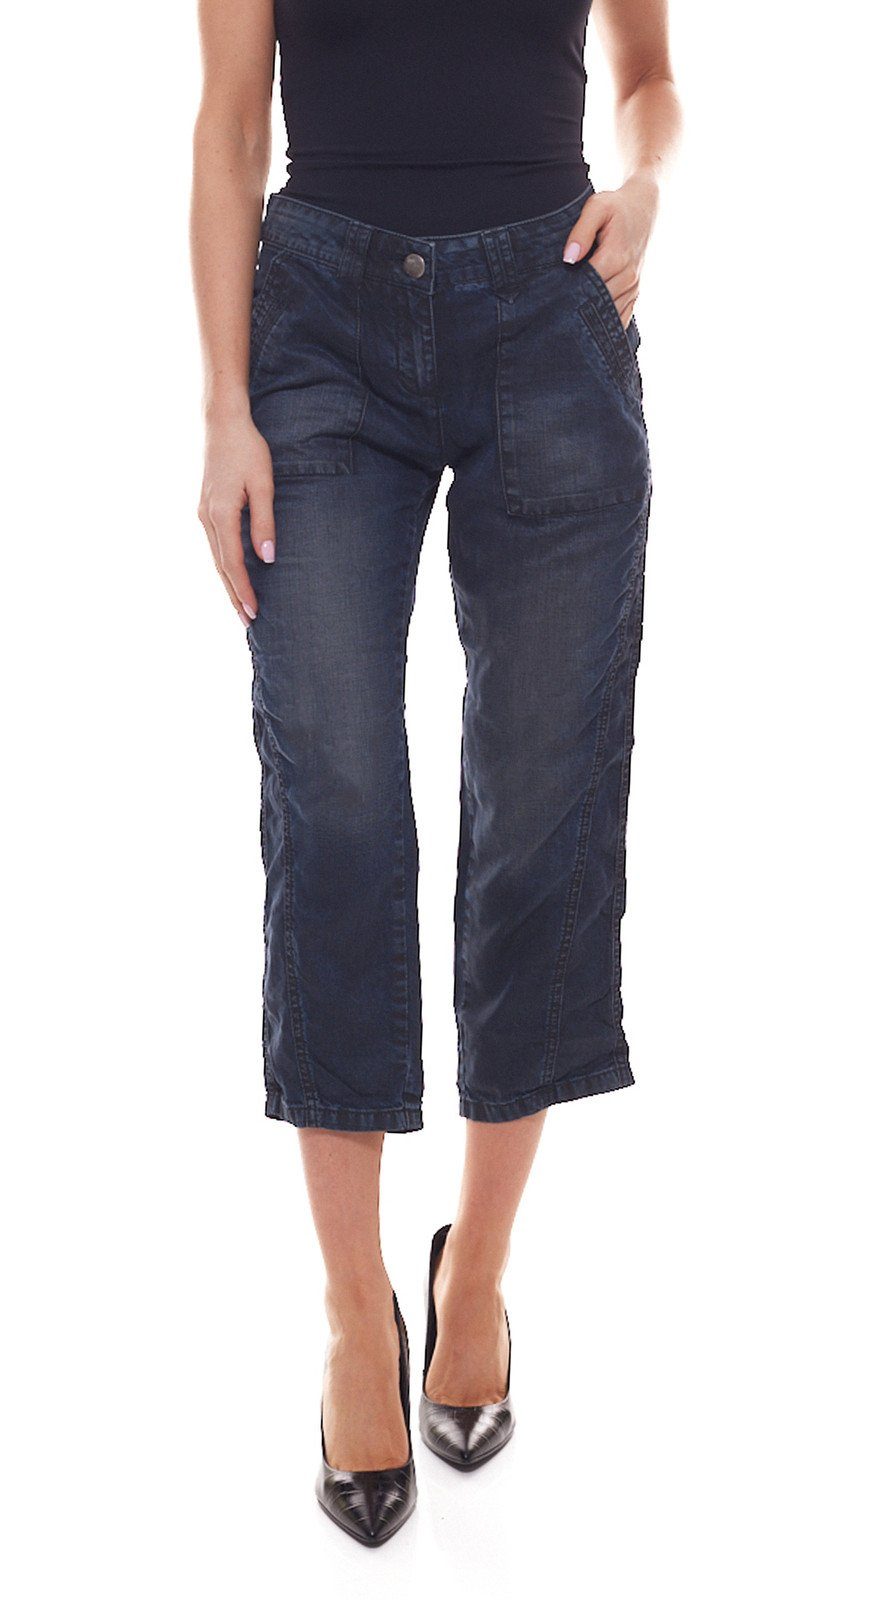 OPUS Caprihose OPUS Melva Джинсы modische Damen Capri-Hose im Denim-Look und Five-Pocket-Style Alltags-Jeans Blau